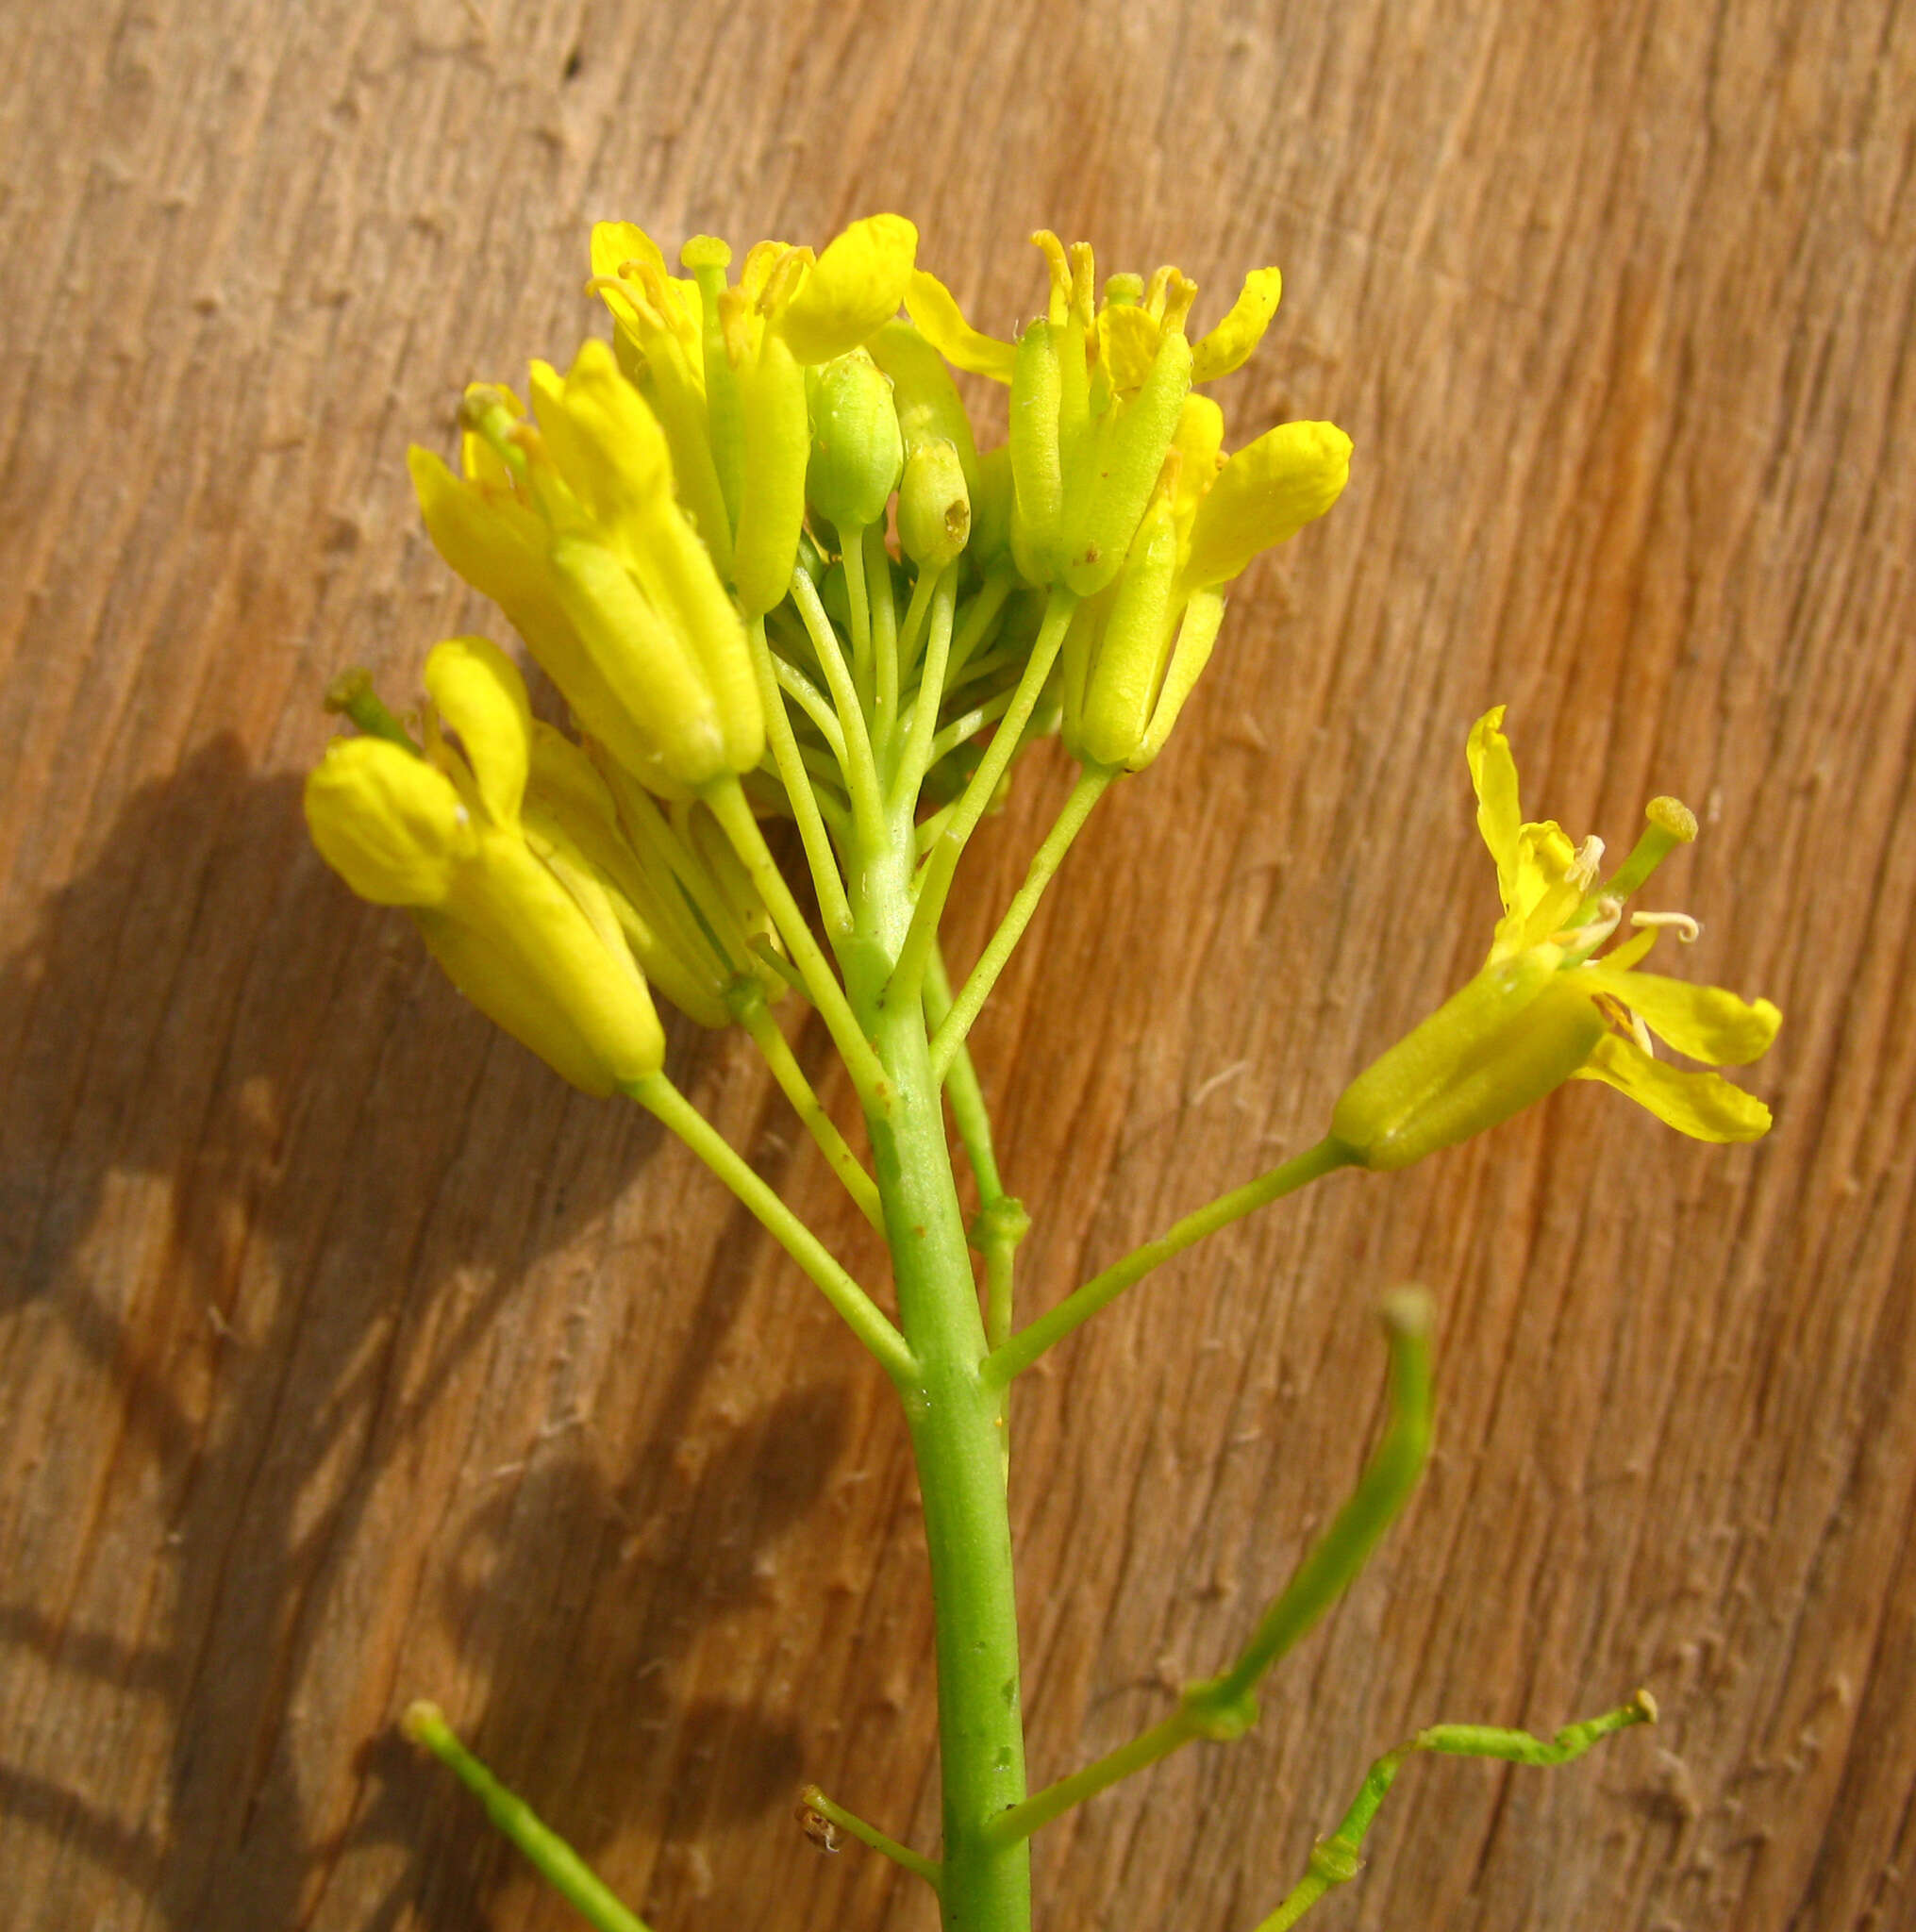 Image of Brassica elongata subsp. integrifolia (Boiss.) Breistr.